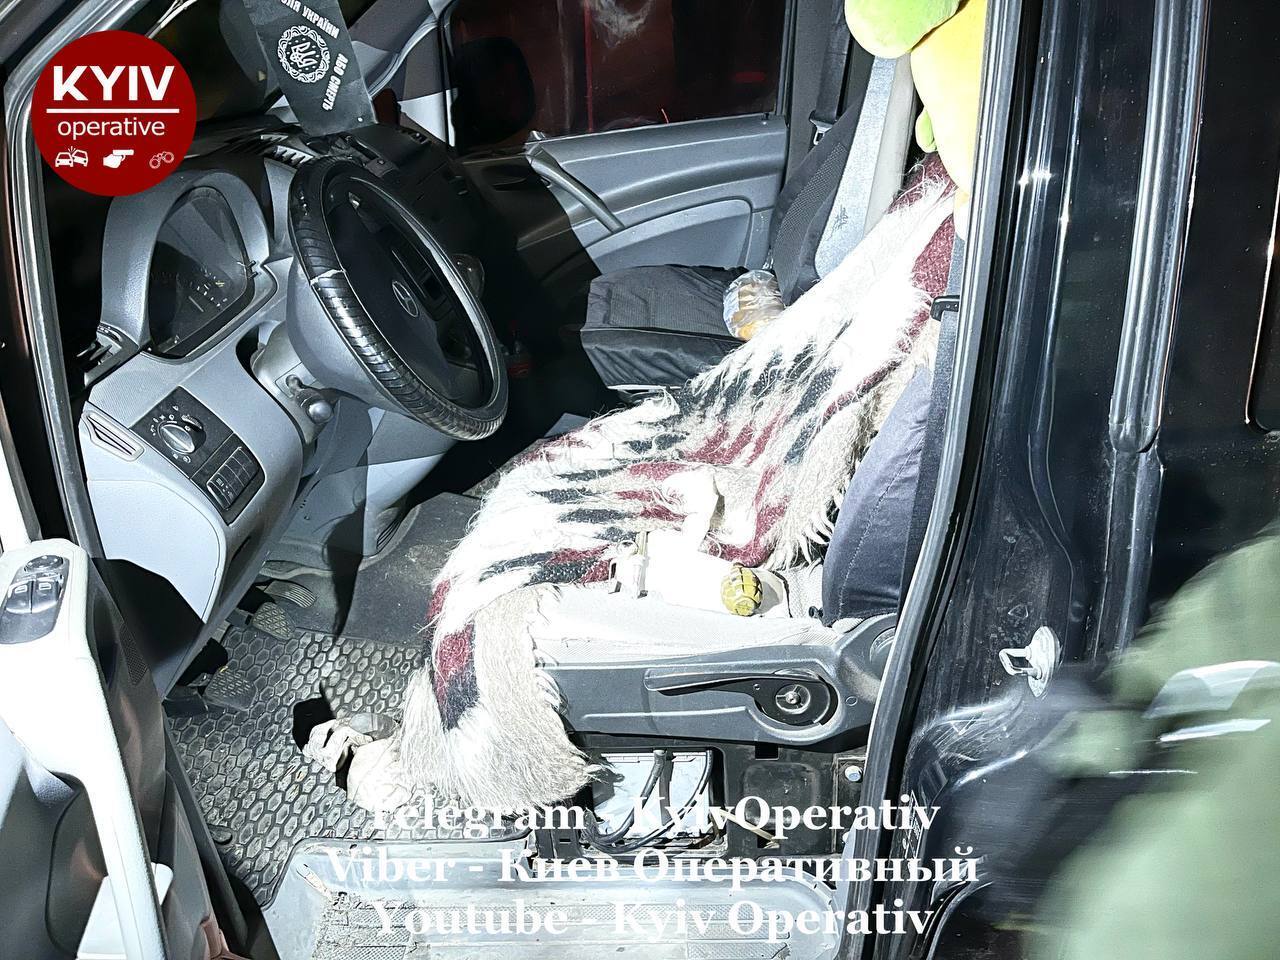 В Киеве задержали нетрезвого водителя без прав с гранатой в авто. Фото